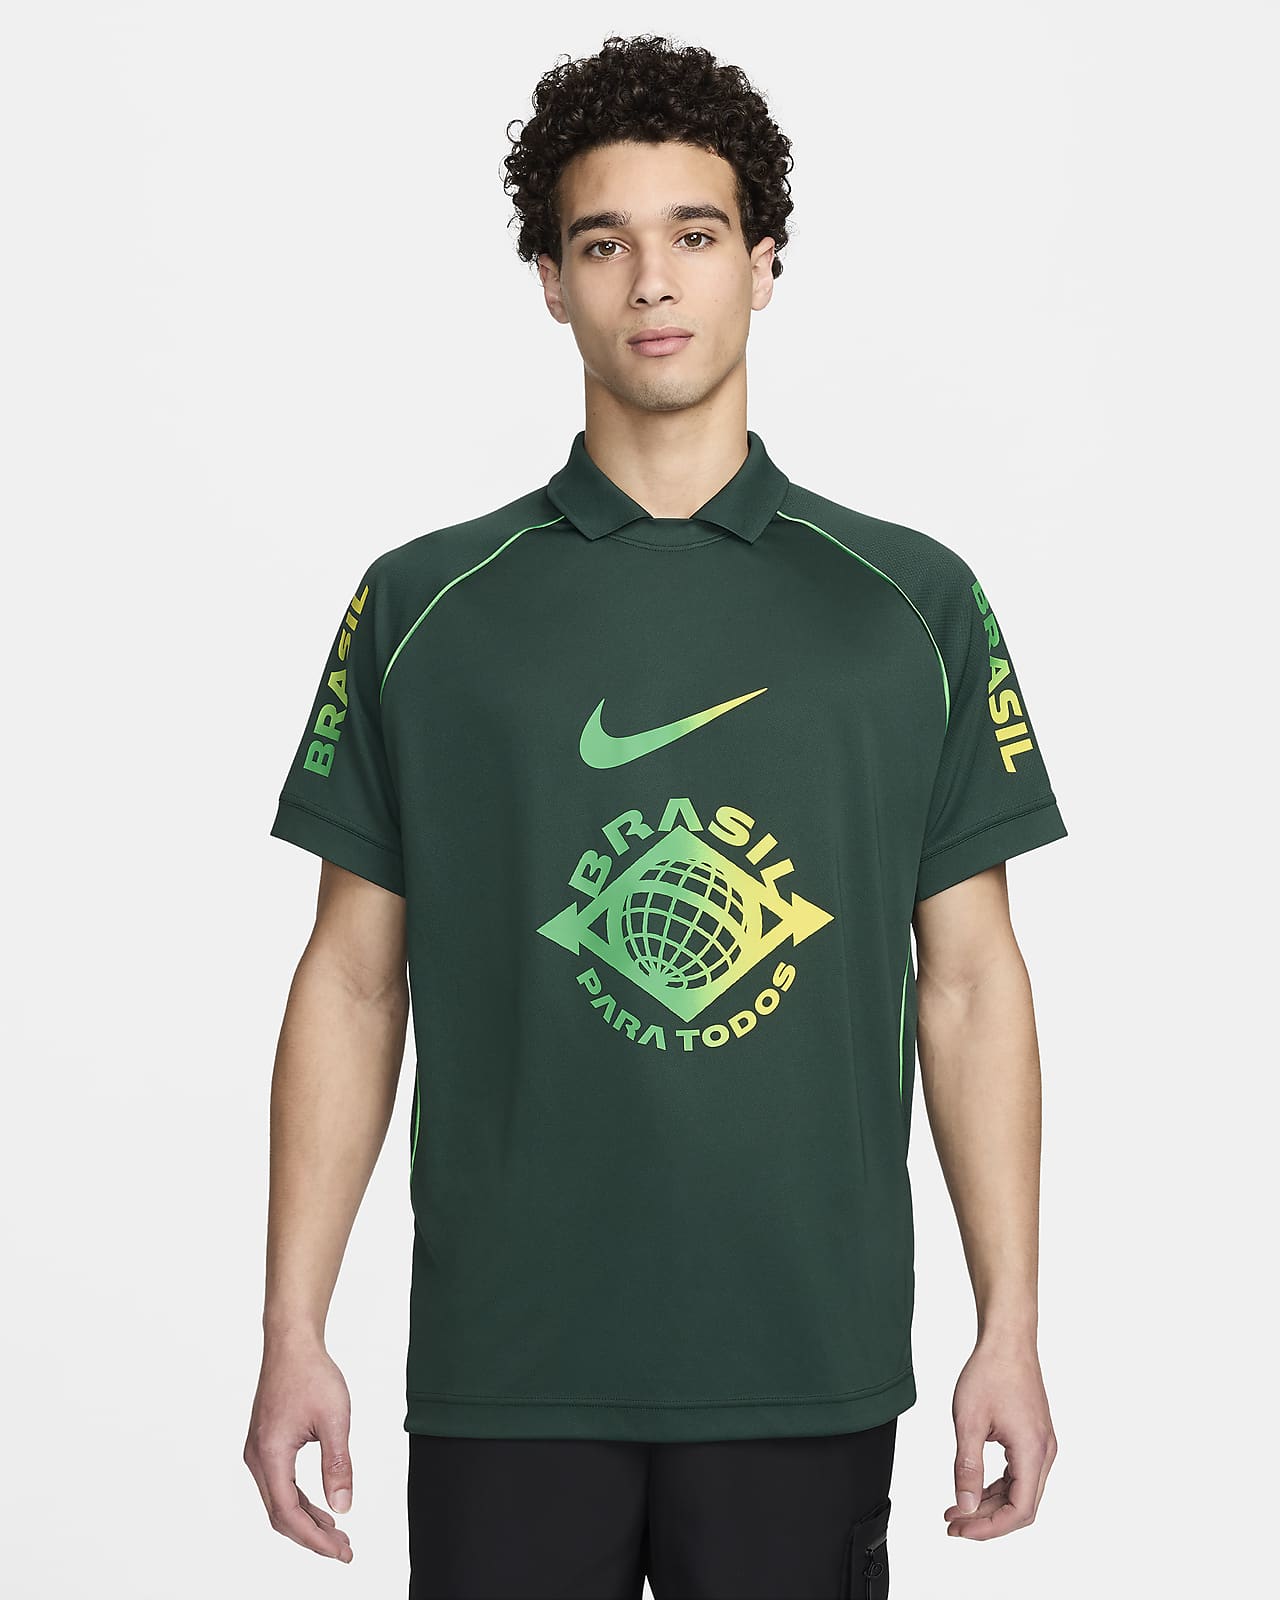 Brazil Men's Nike Dri-FIT Soccer Jersey